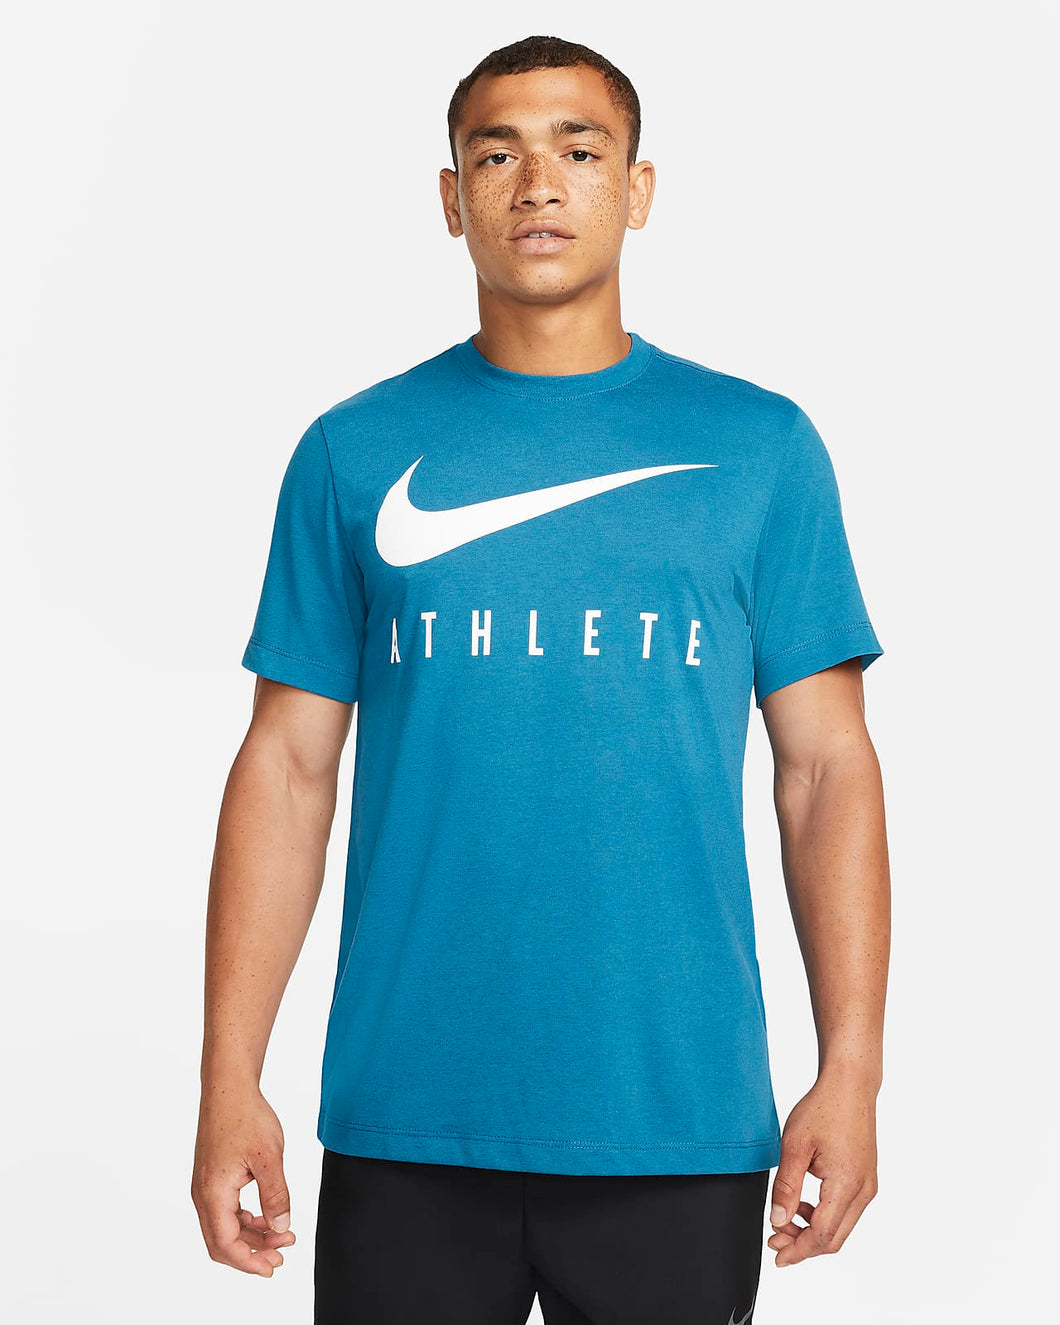 Nike Swoosh Athlete T-Shirt Industrial Blue – Wod Gear Australia